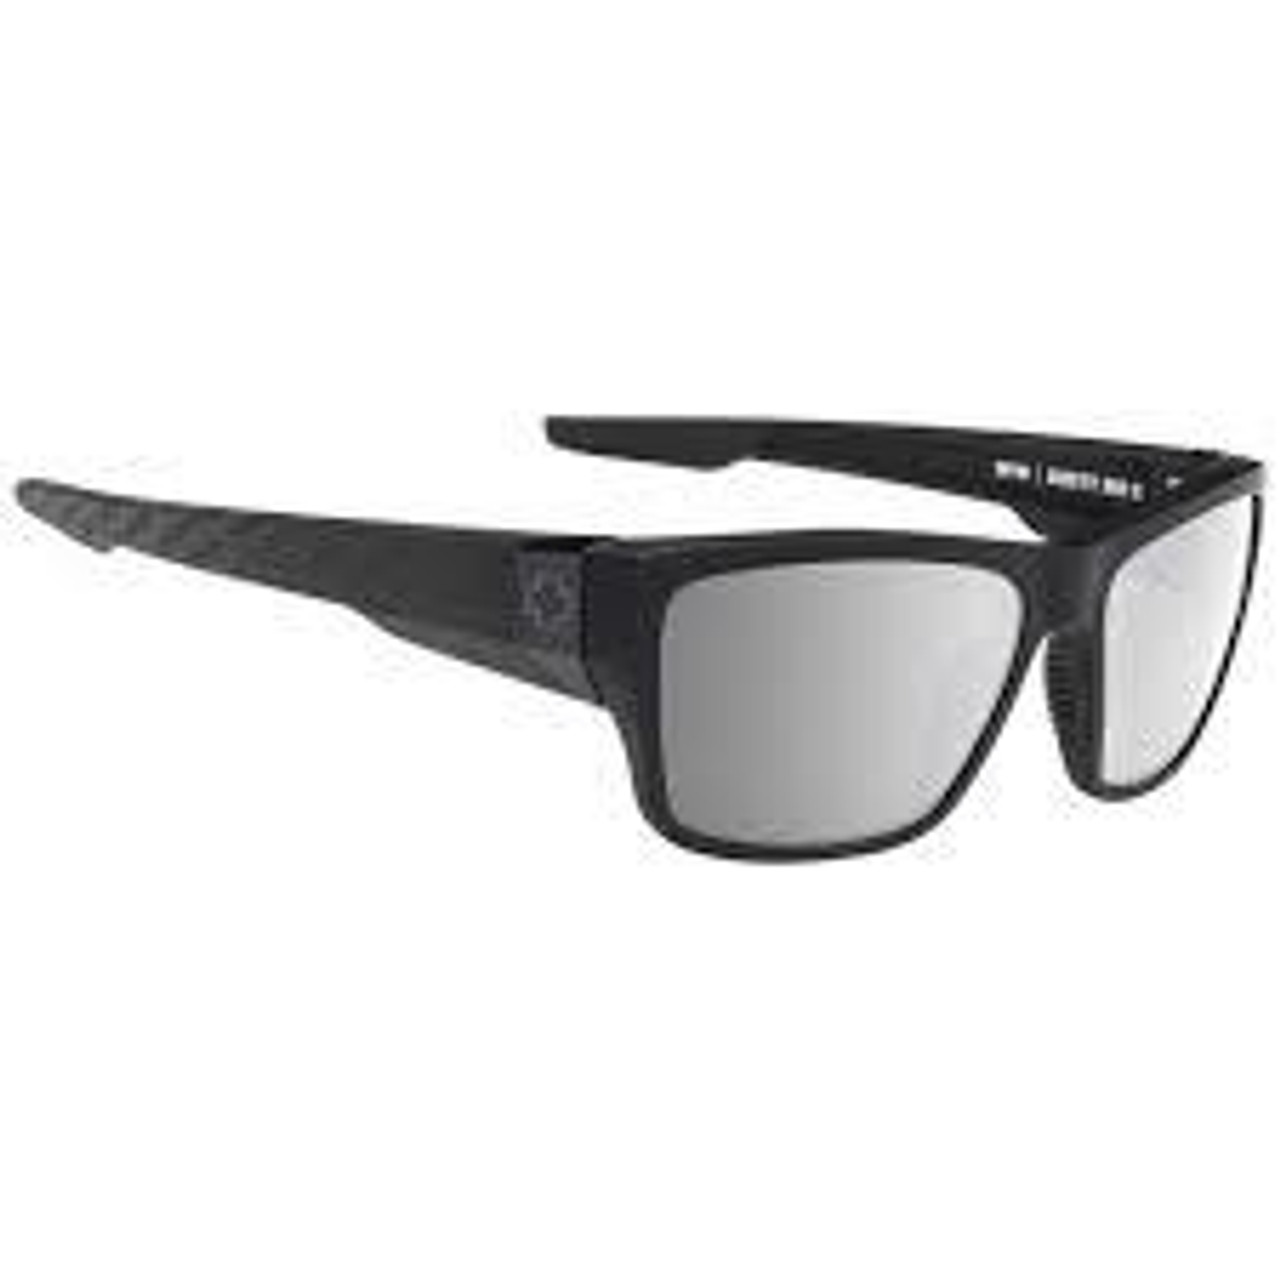 Spy Dirty Mo 2 Sunglasses